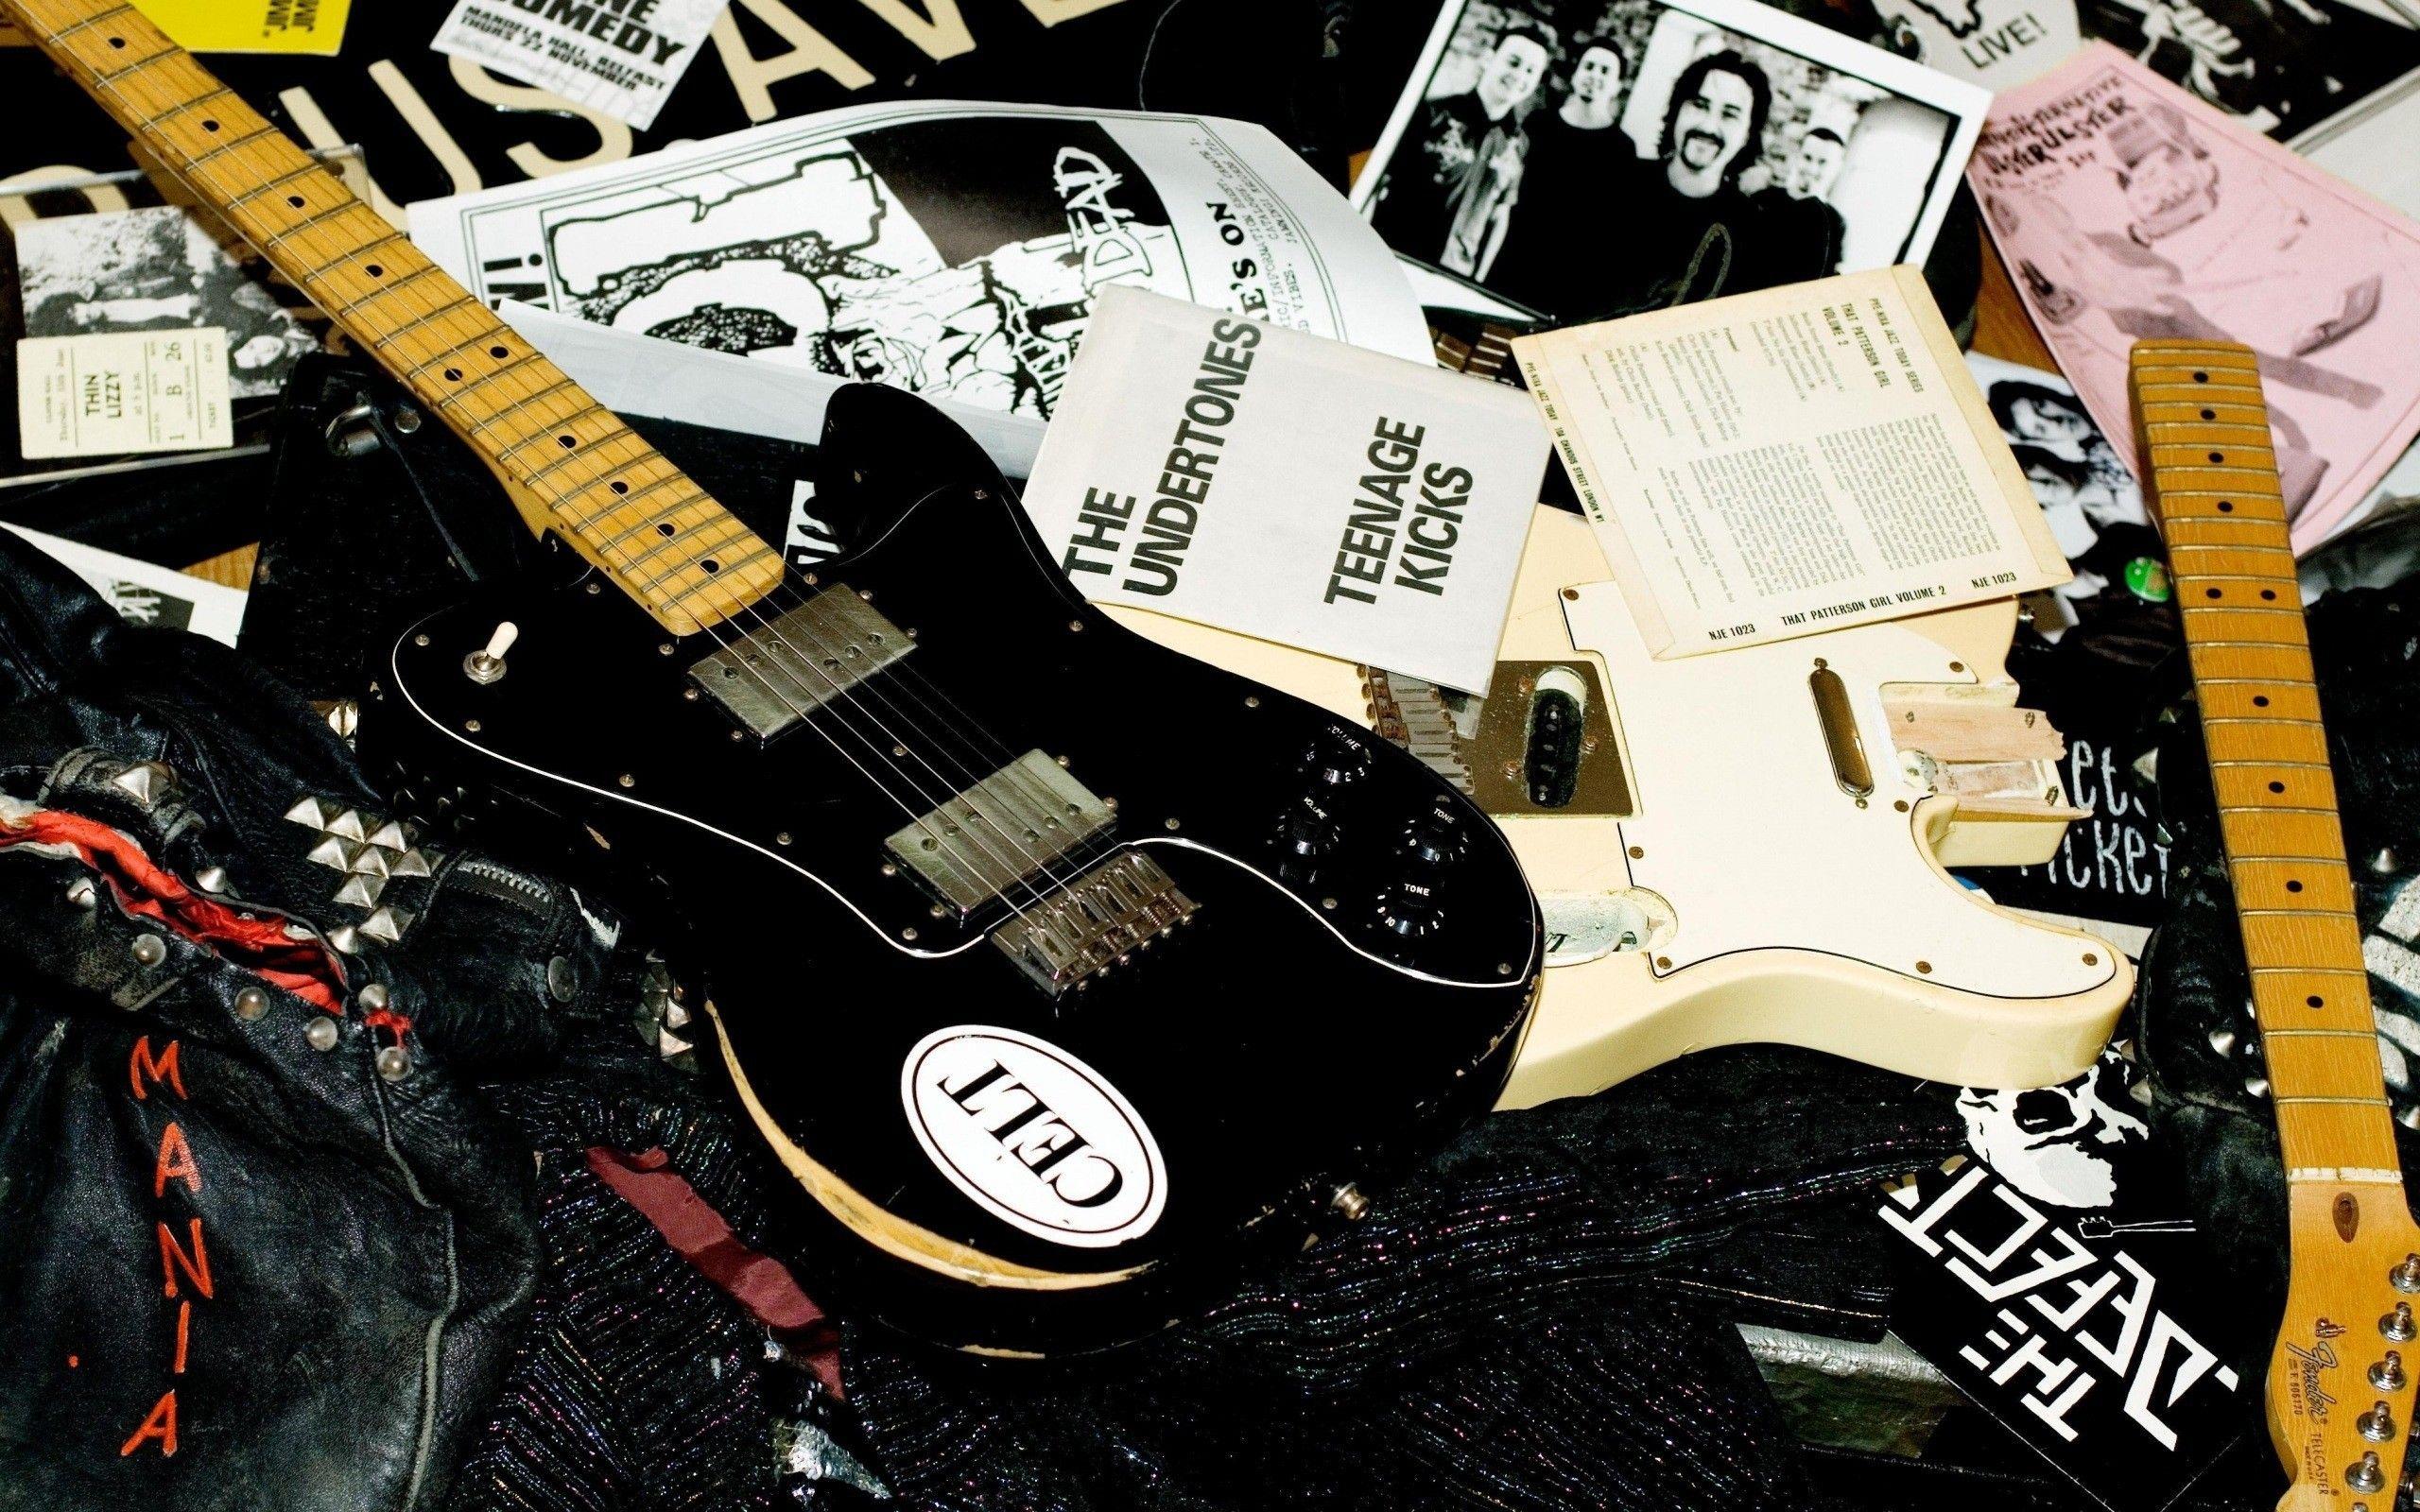 Rock music guitars stars wallpaper. PC